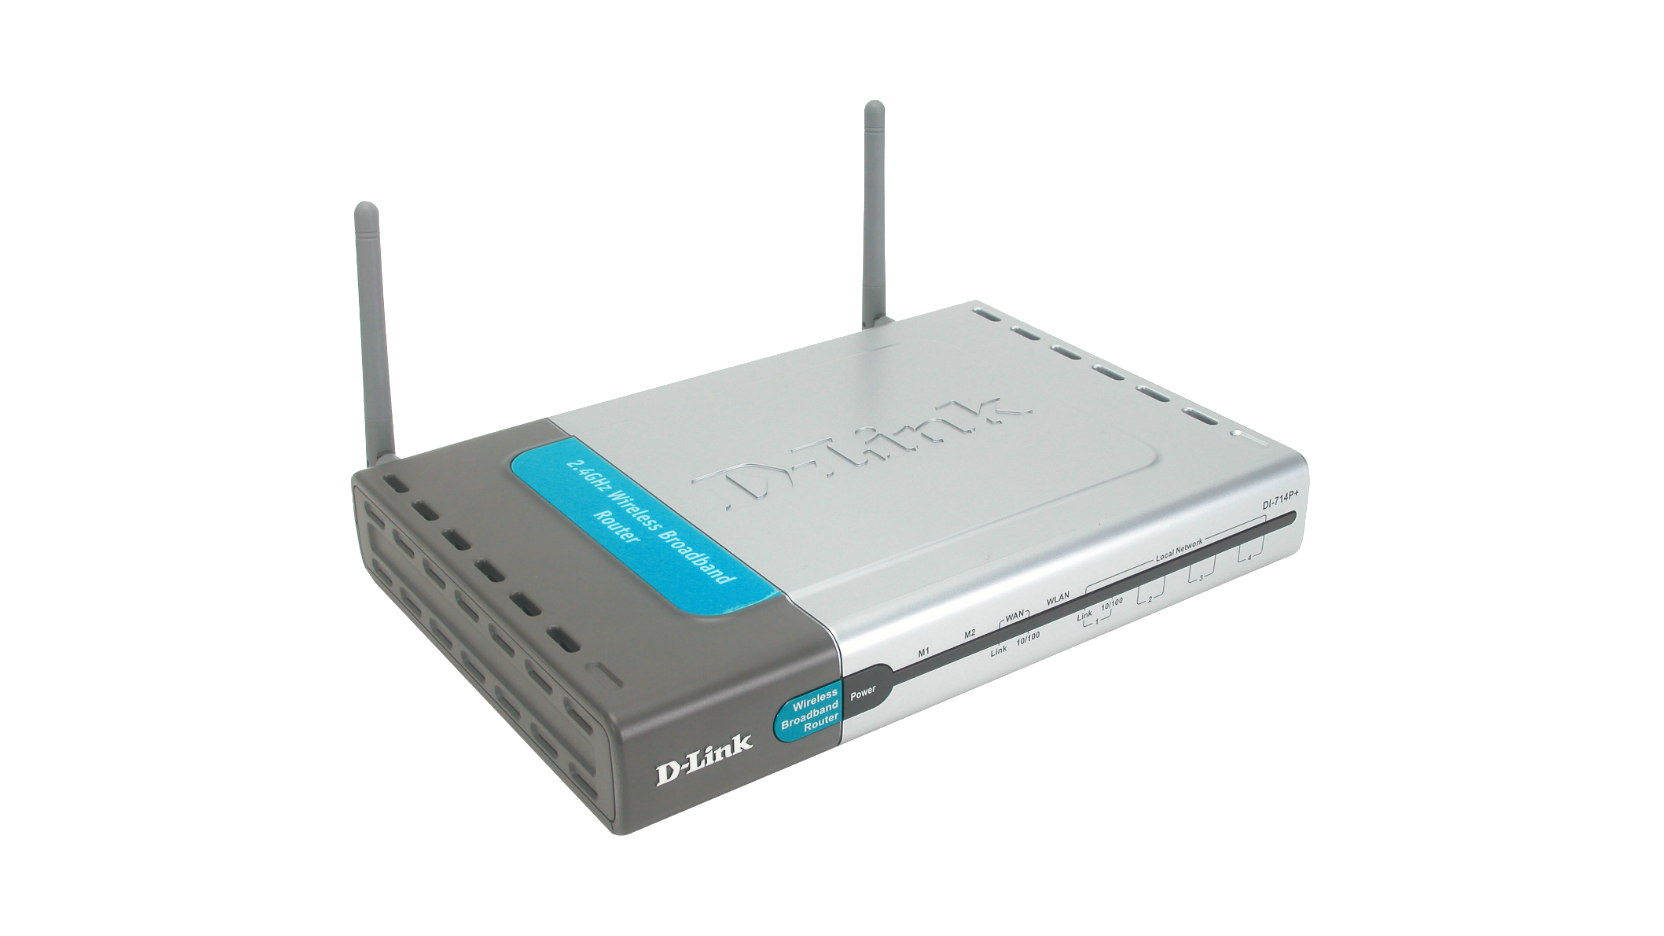 D link 125 WIFI роутер. D link принт сервер WIFI. Wi-Fi роутер 3com Wireless lan access point 8250. Роутер e70 NGW. Роутер сервер купить